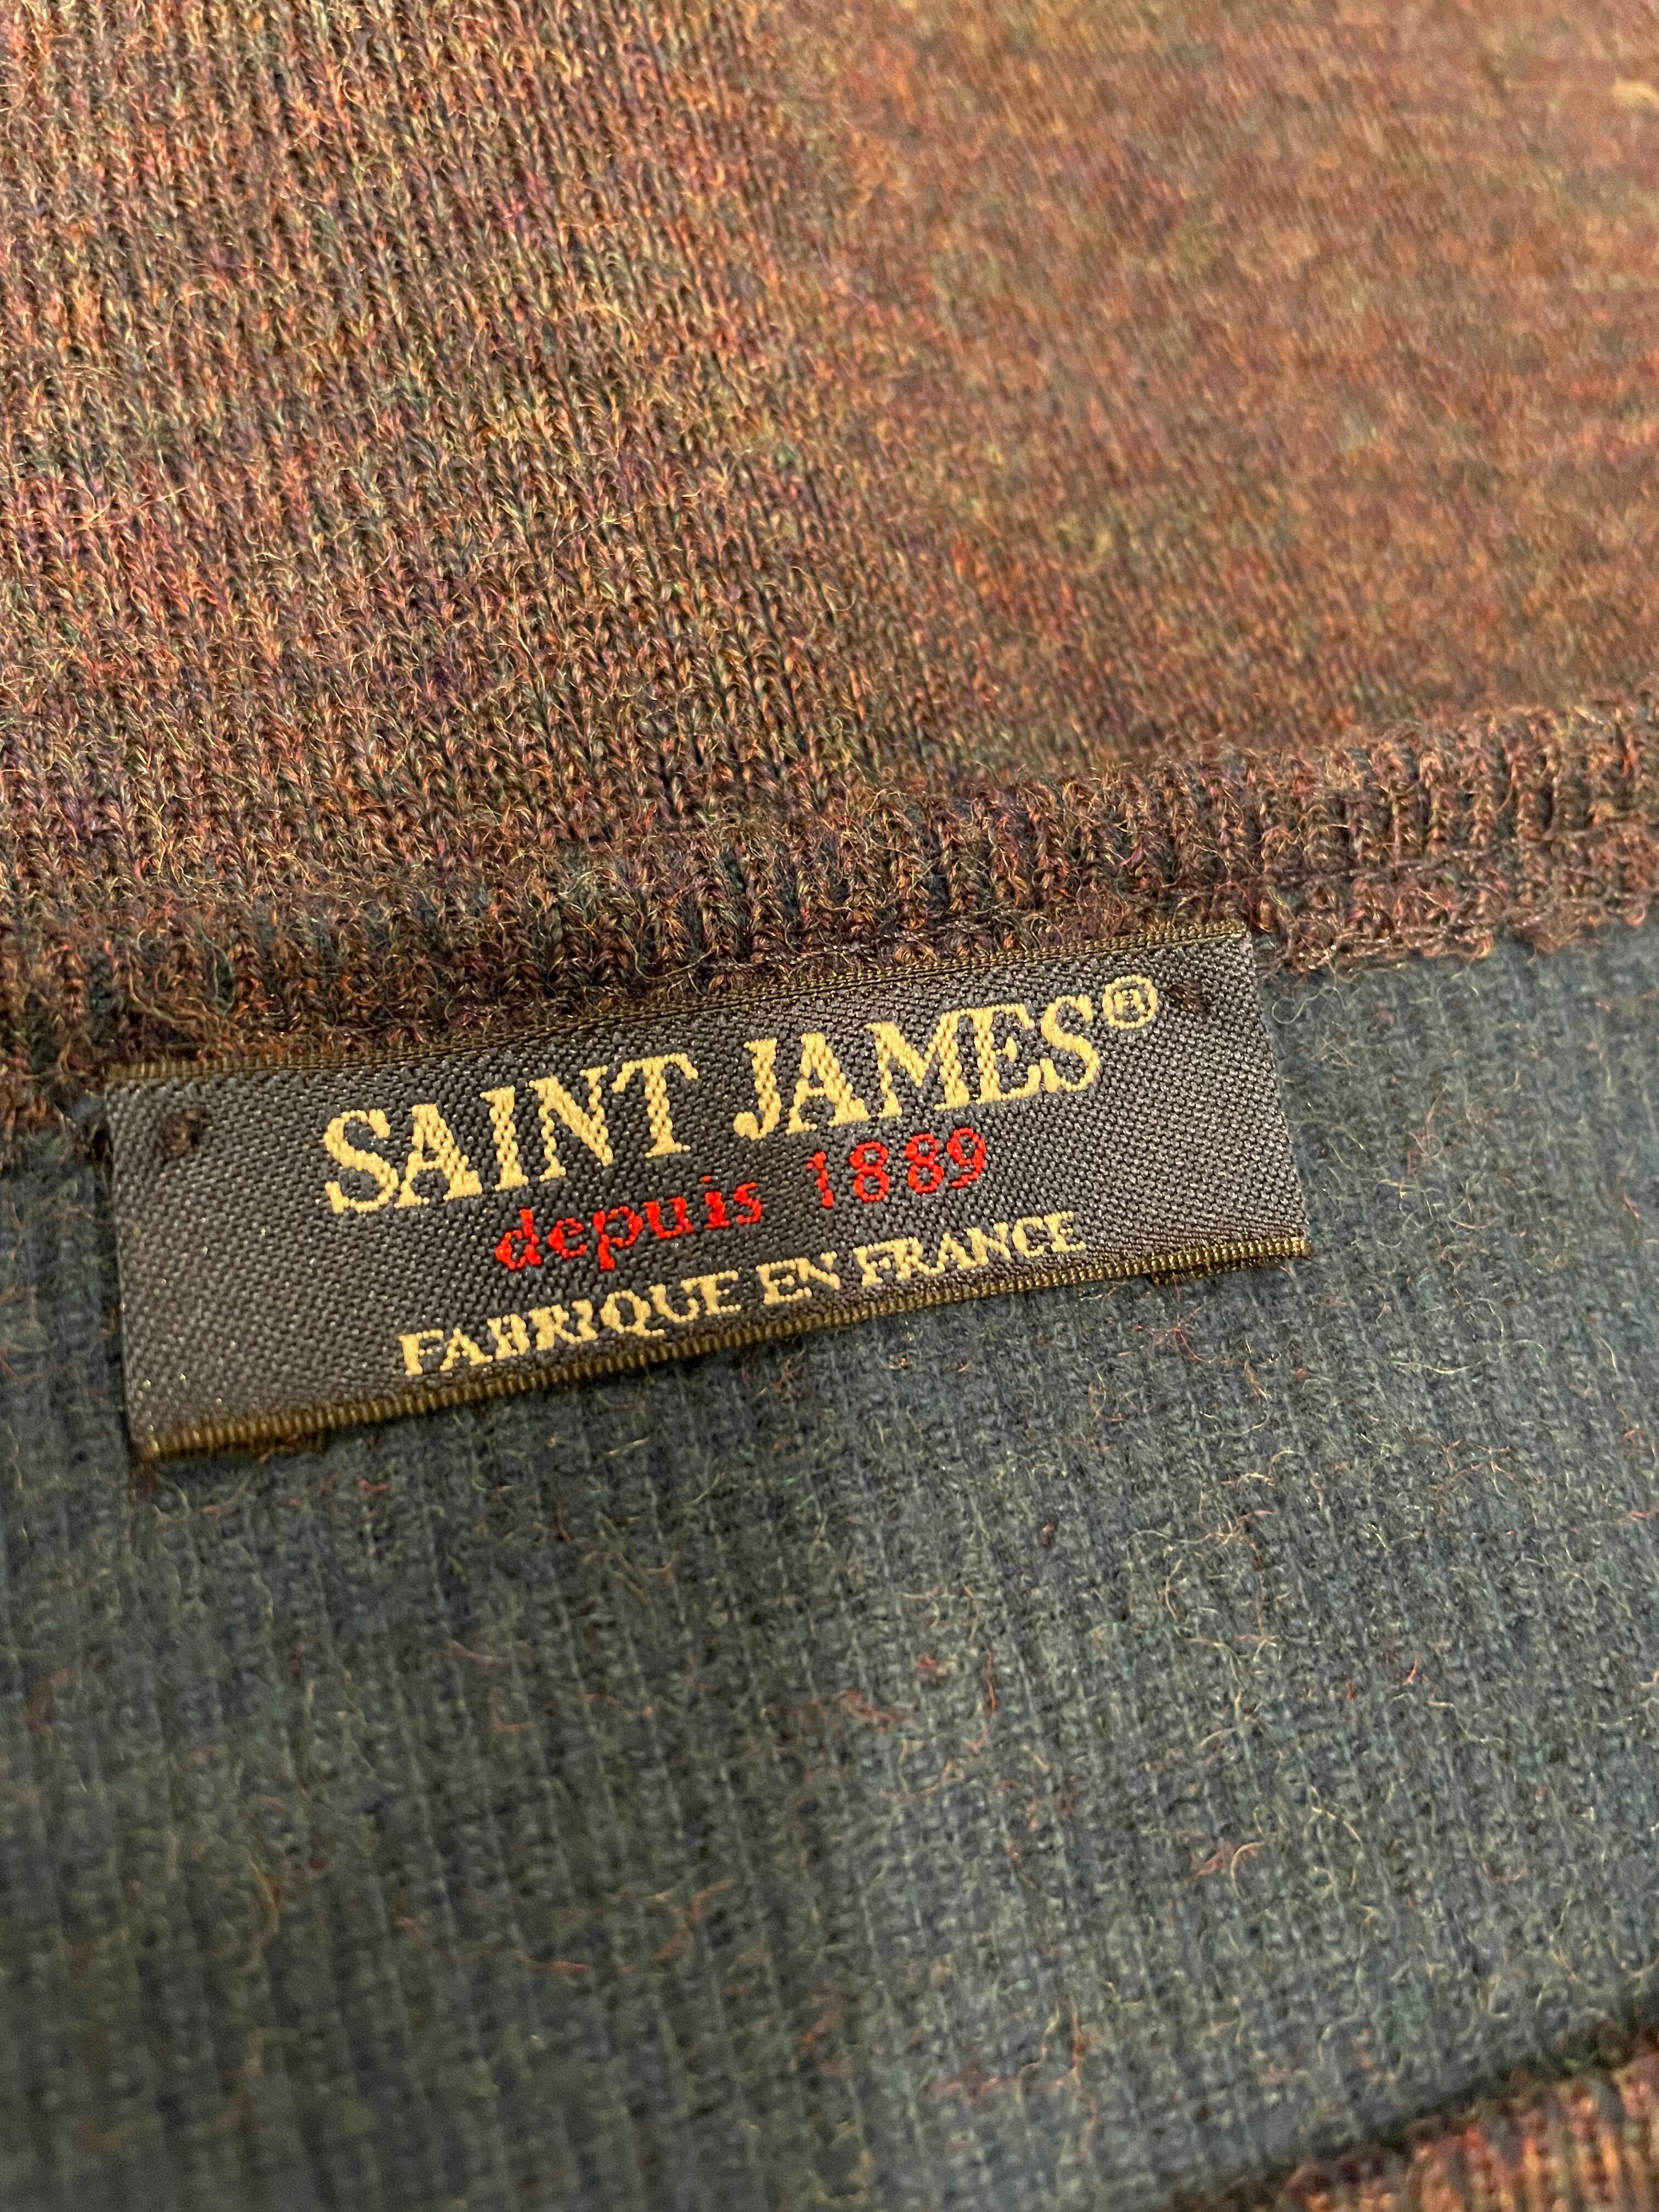 SAINT JAMES セントジェームス バスクシャツ ロングスリーブ Tシャツ トップス ネイビー メンズM フランス製 カジュアル シンプル